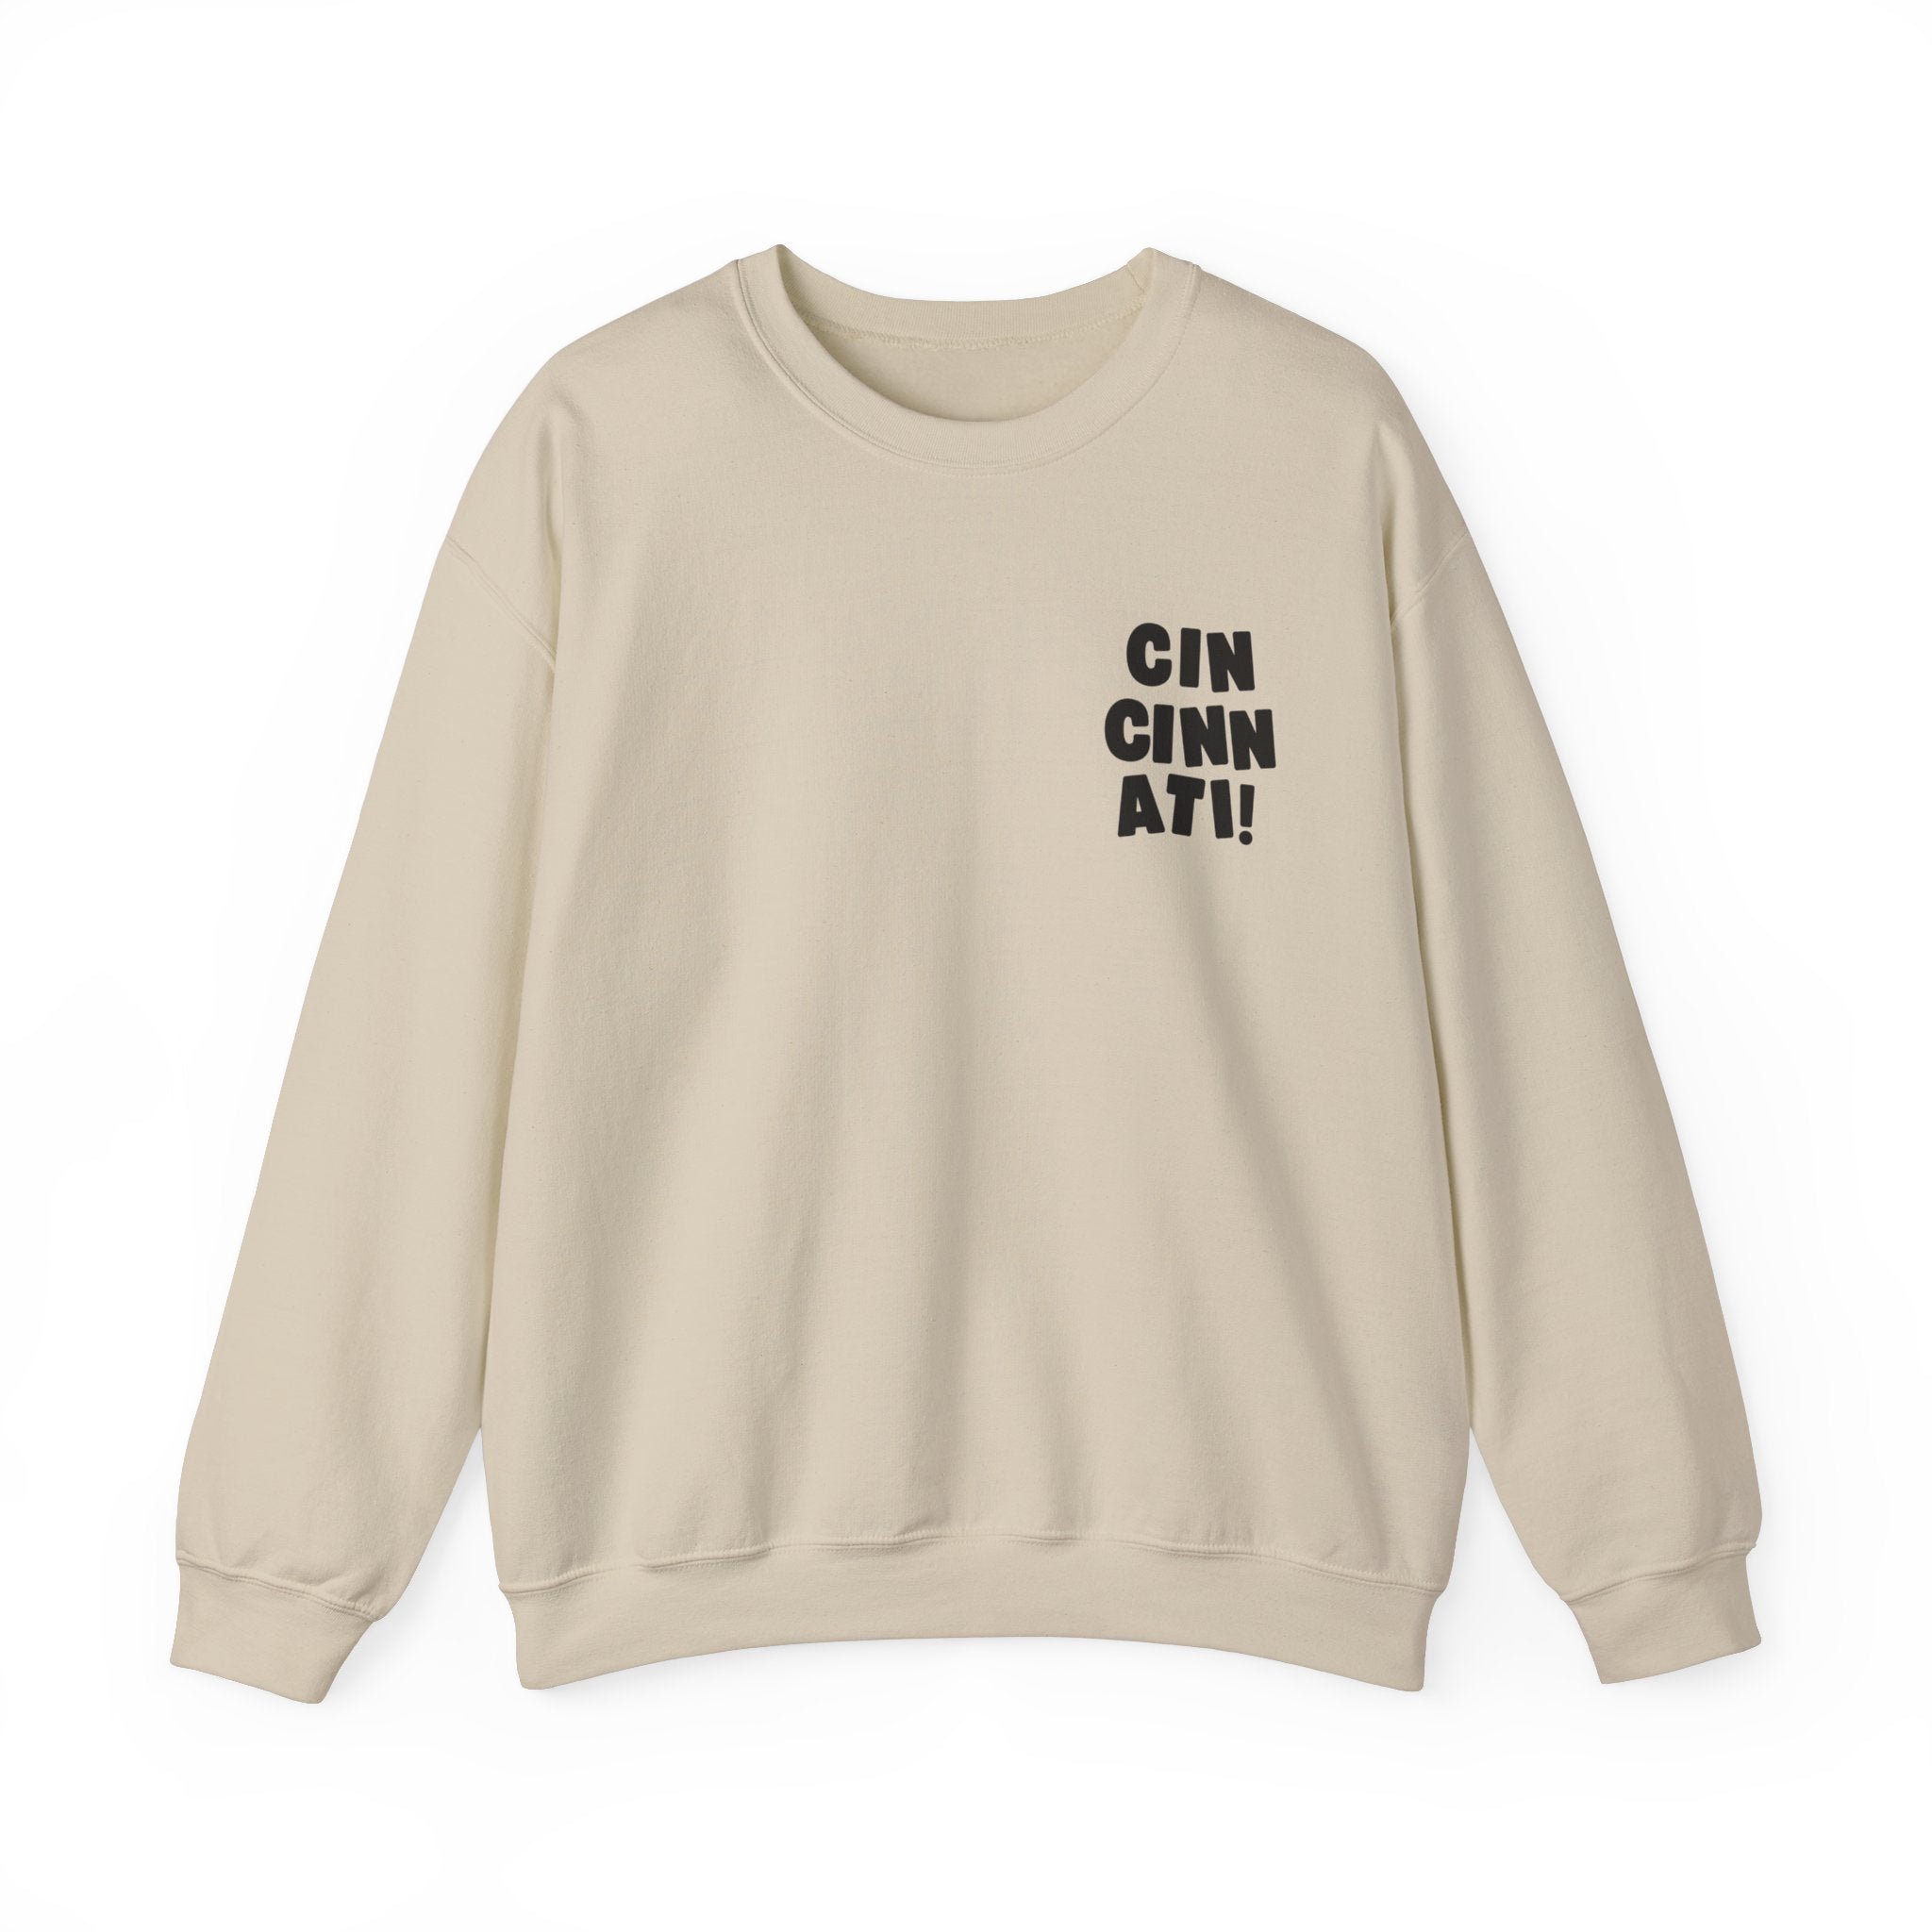 Cincinnati Crewneck Swweatshirt